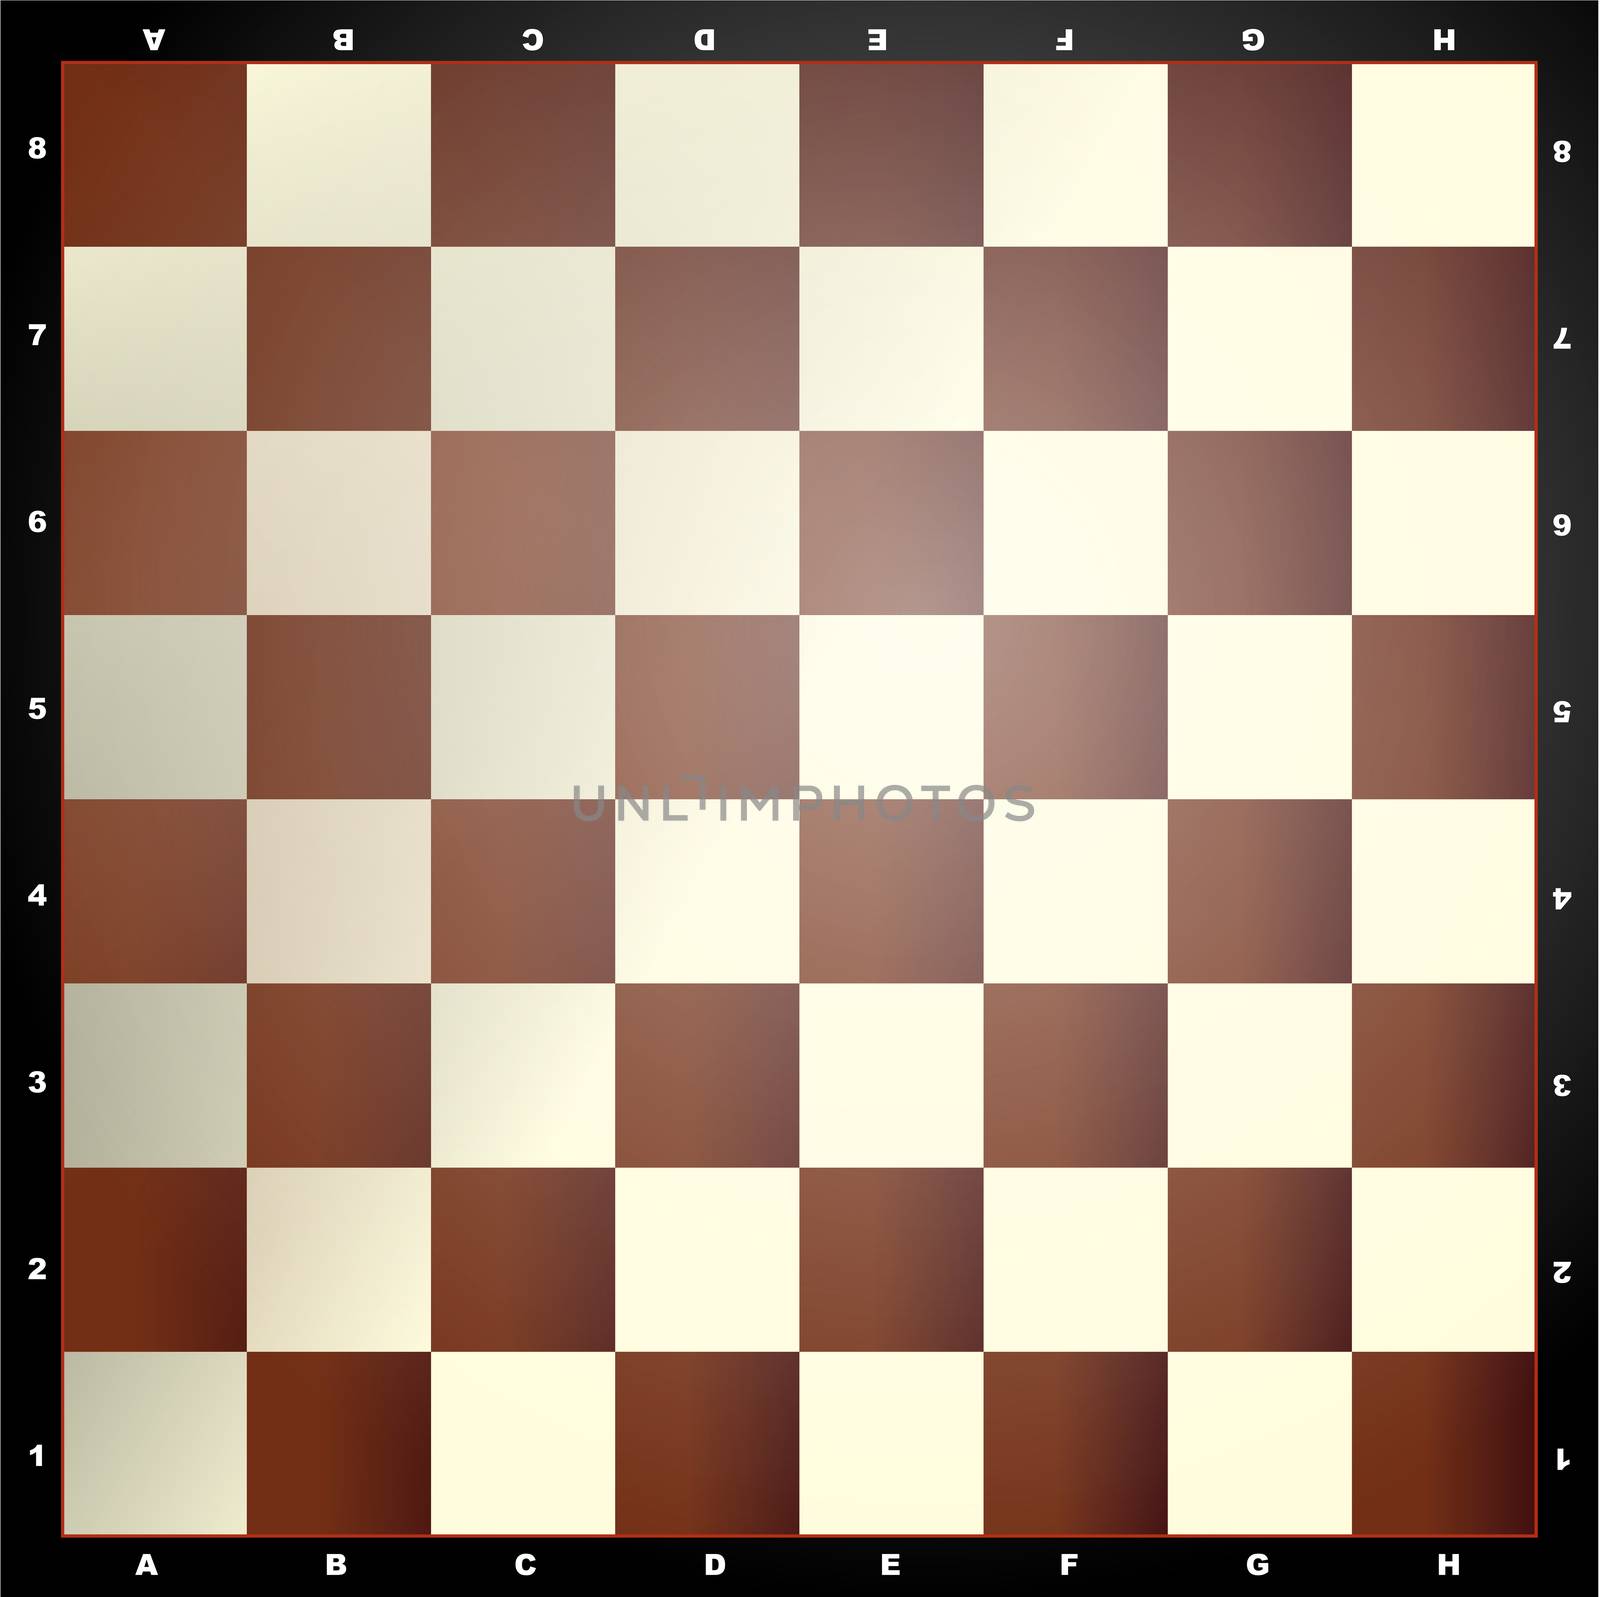 Chessboard illustration by Vectorex